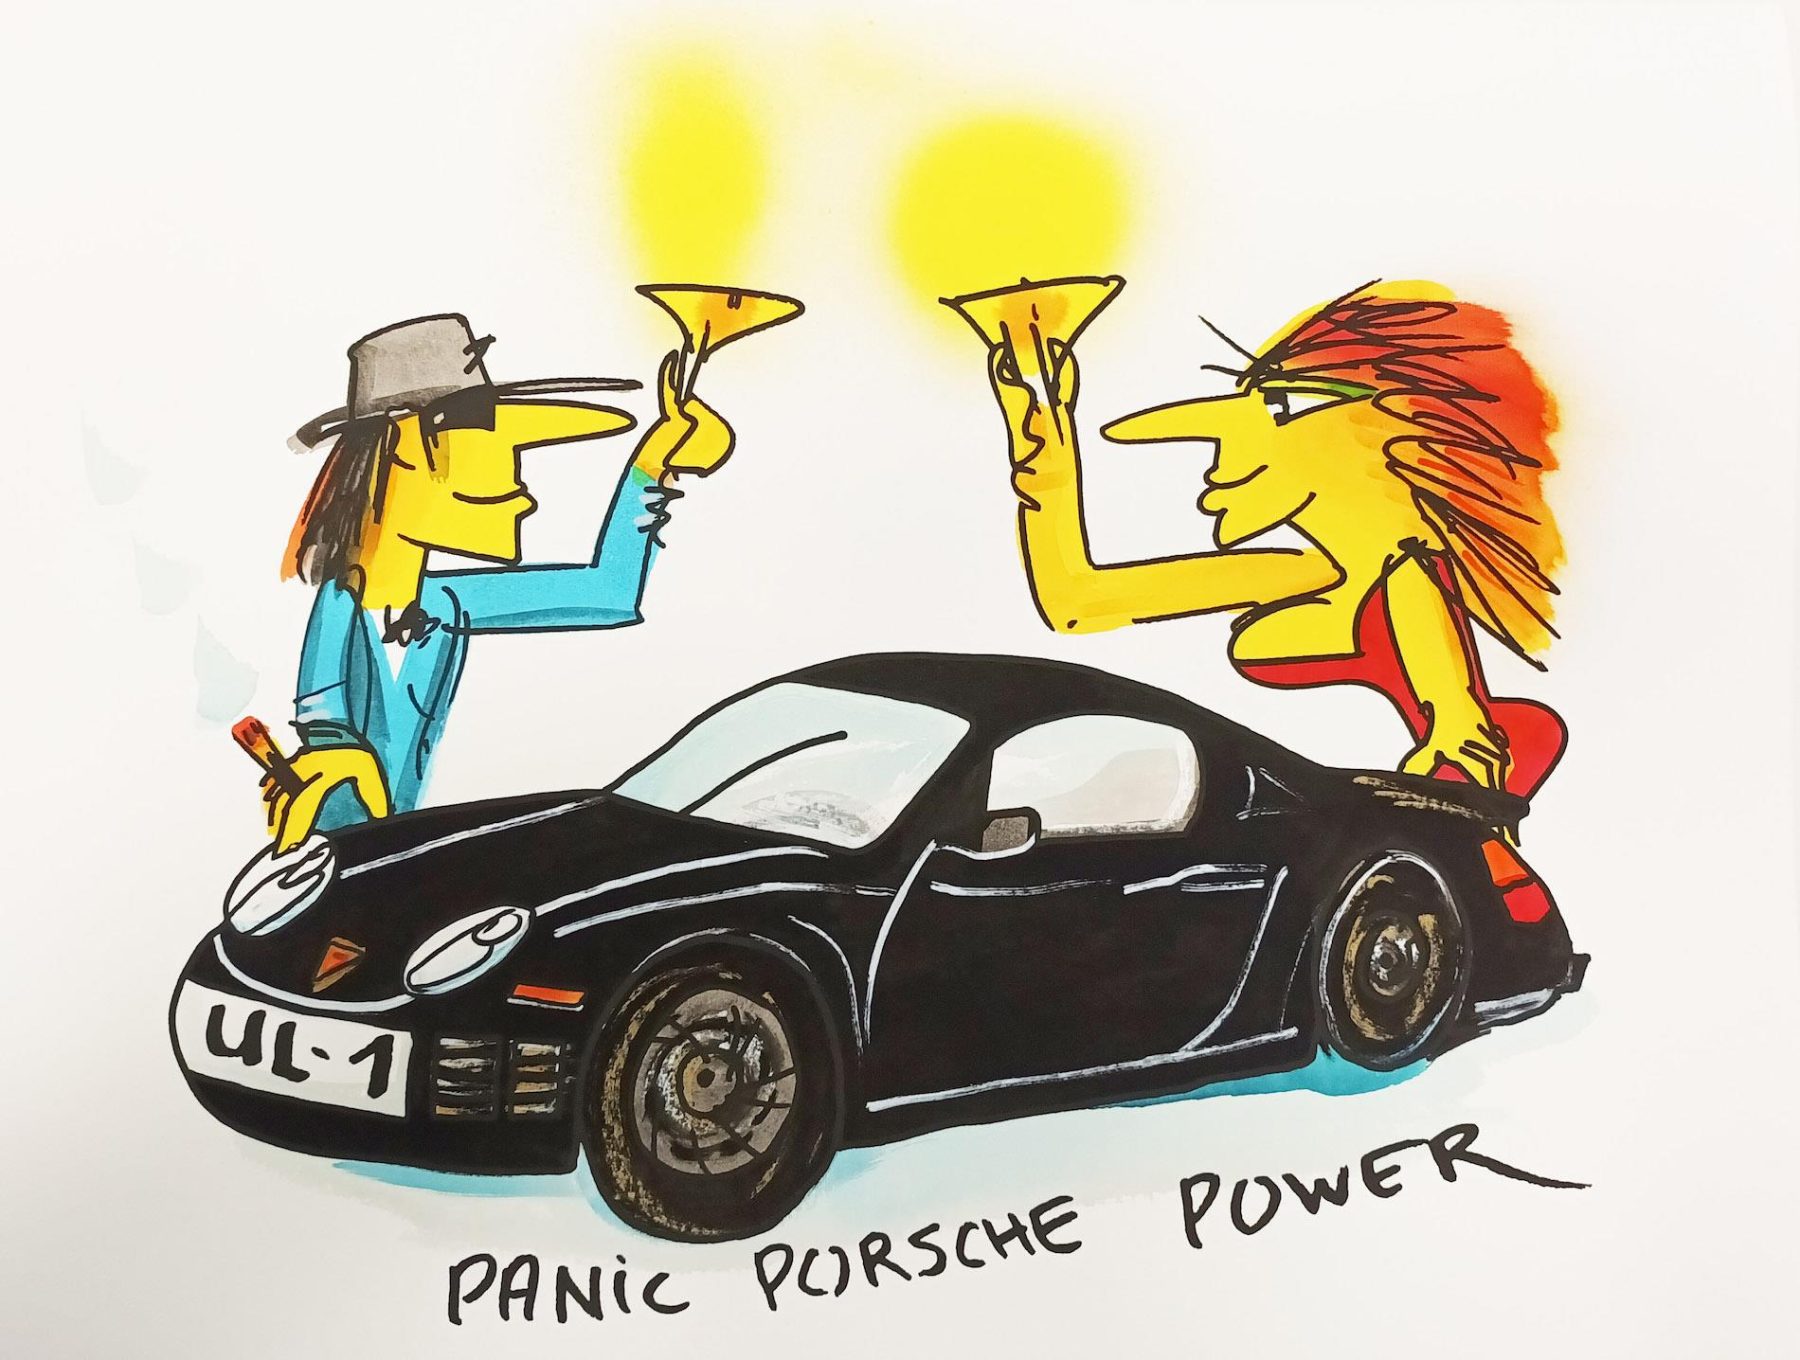 Panik Porsche Power (Black Edition) - Lindenberg, Udo - k-2212LIN1